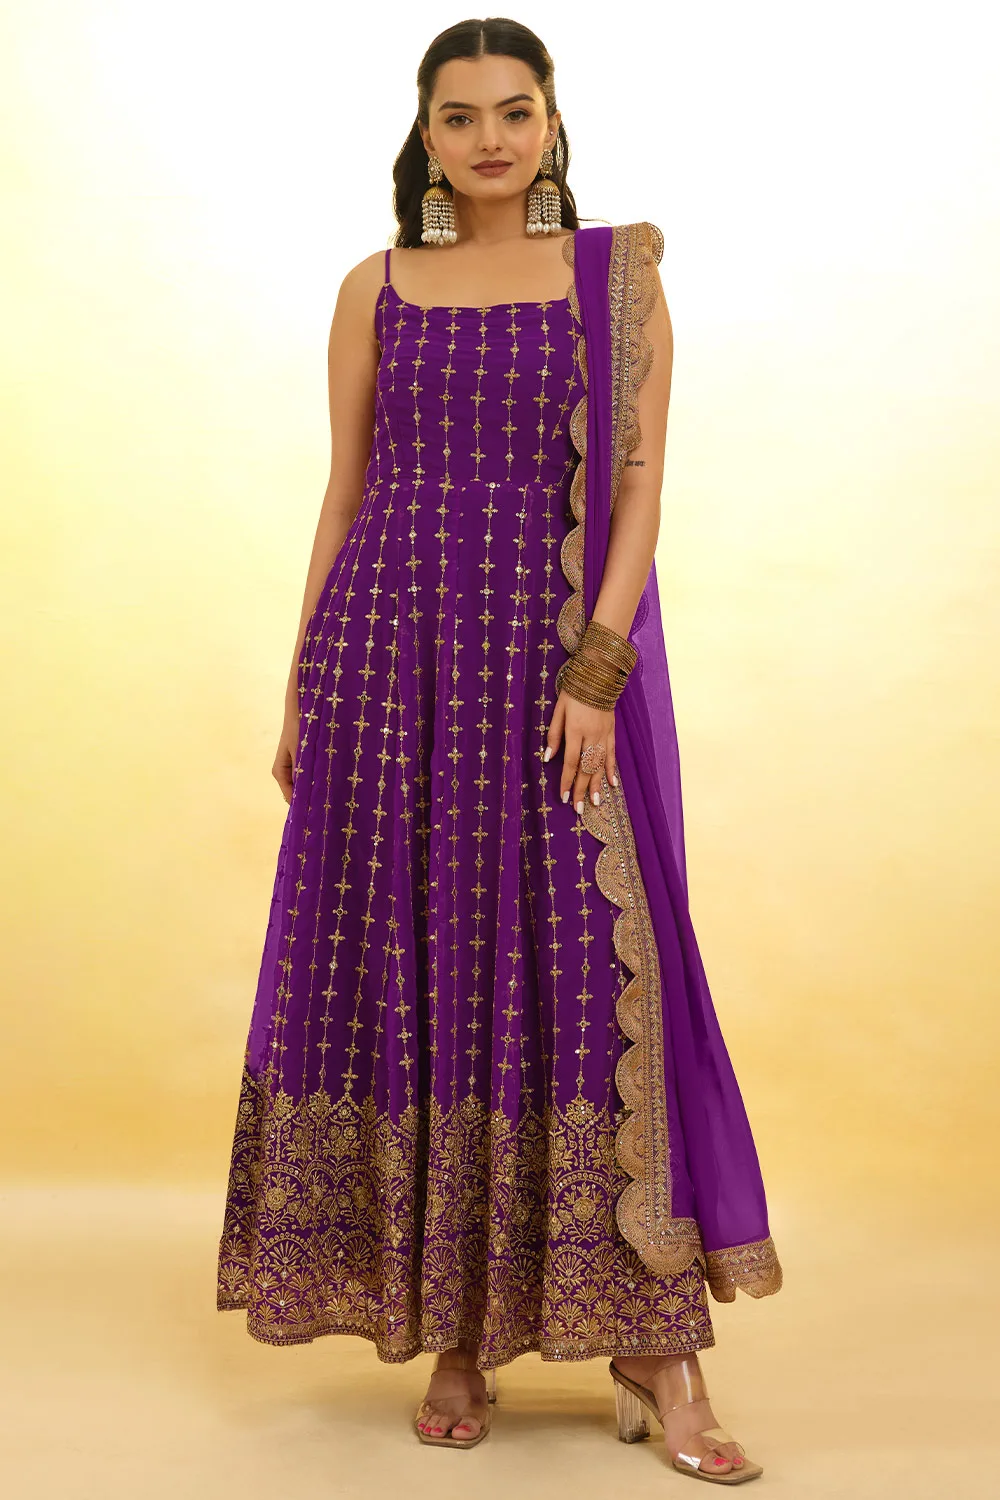 Luxurious Purple Organza Salwar Kameez with Gold Foil Print and Intricate Zari Border Work